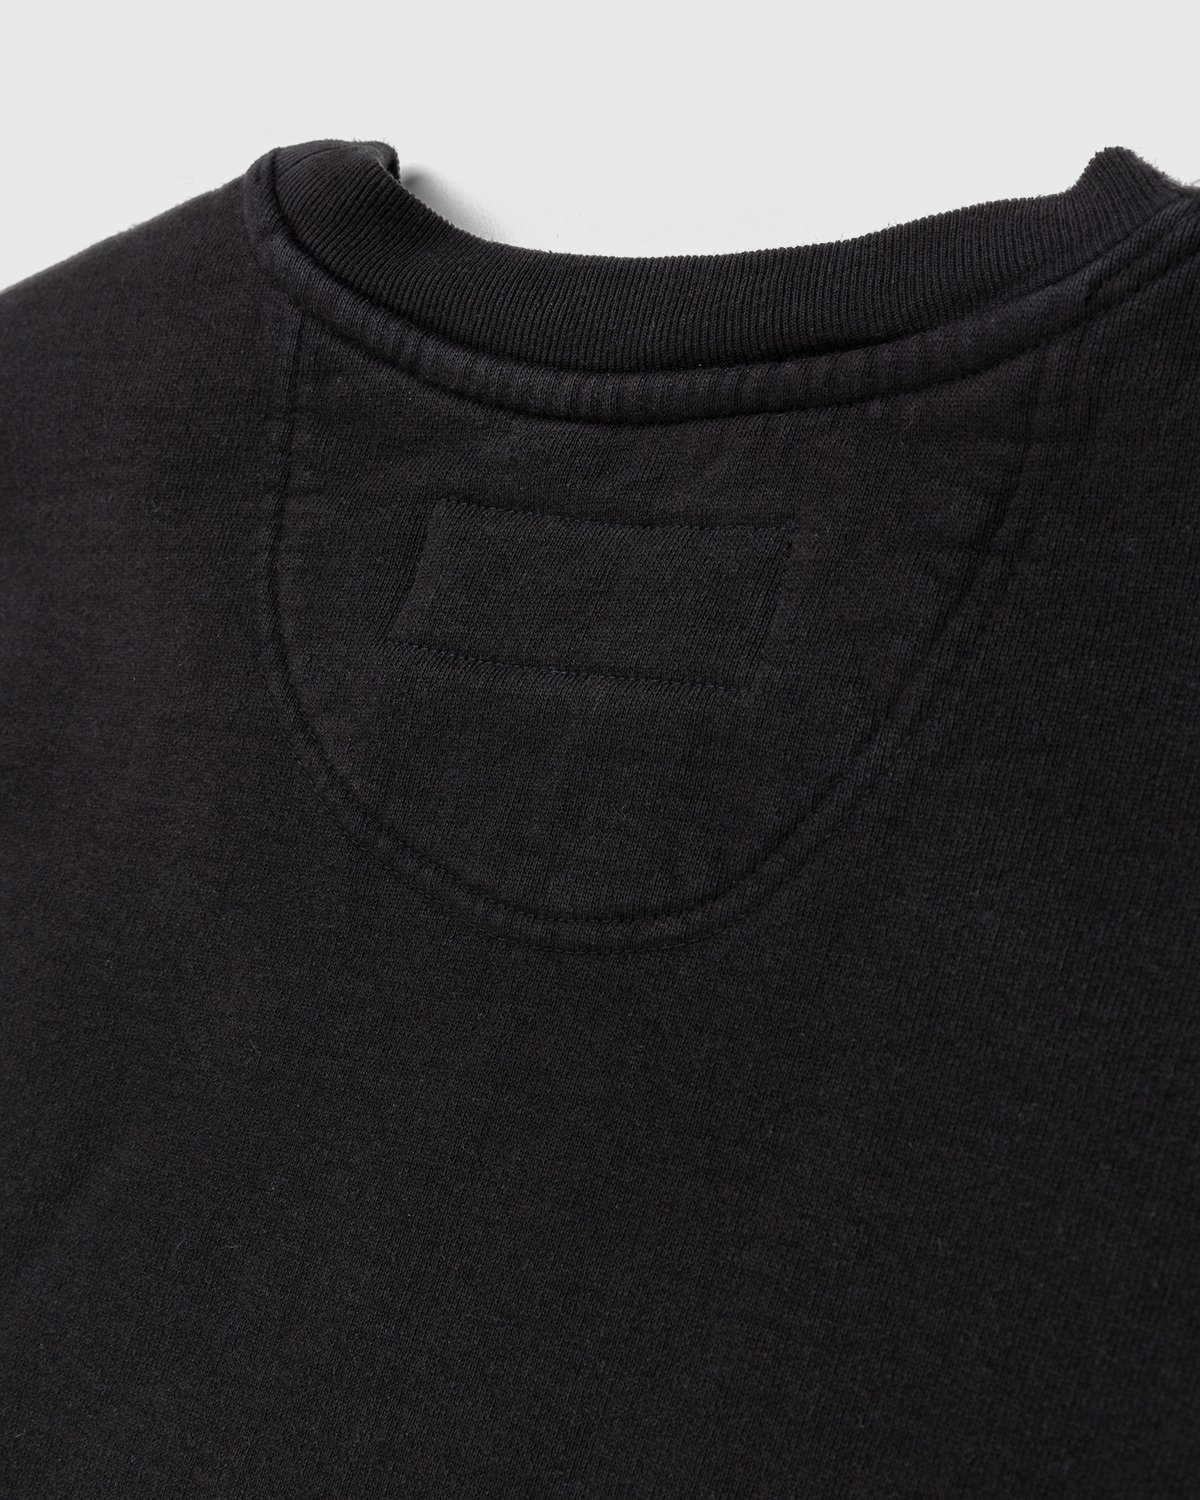 Noon Goons – Garden Sweatshirt Black - Sweatshirts - Black - Image 5